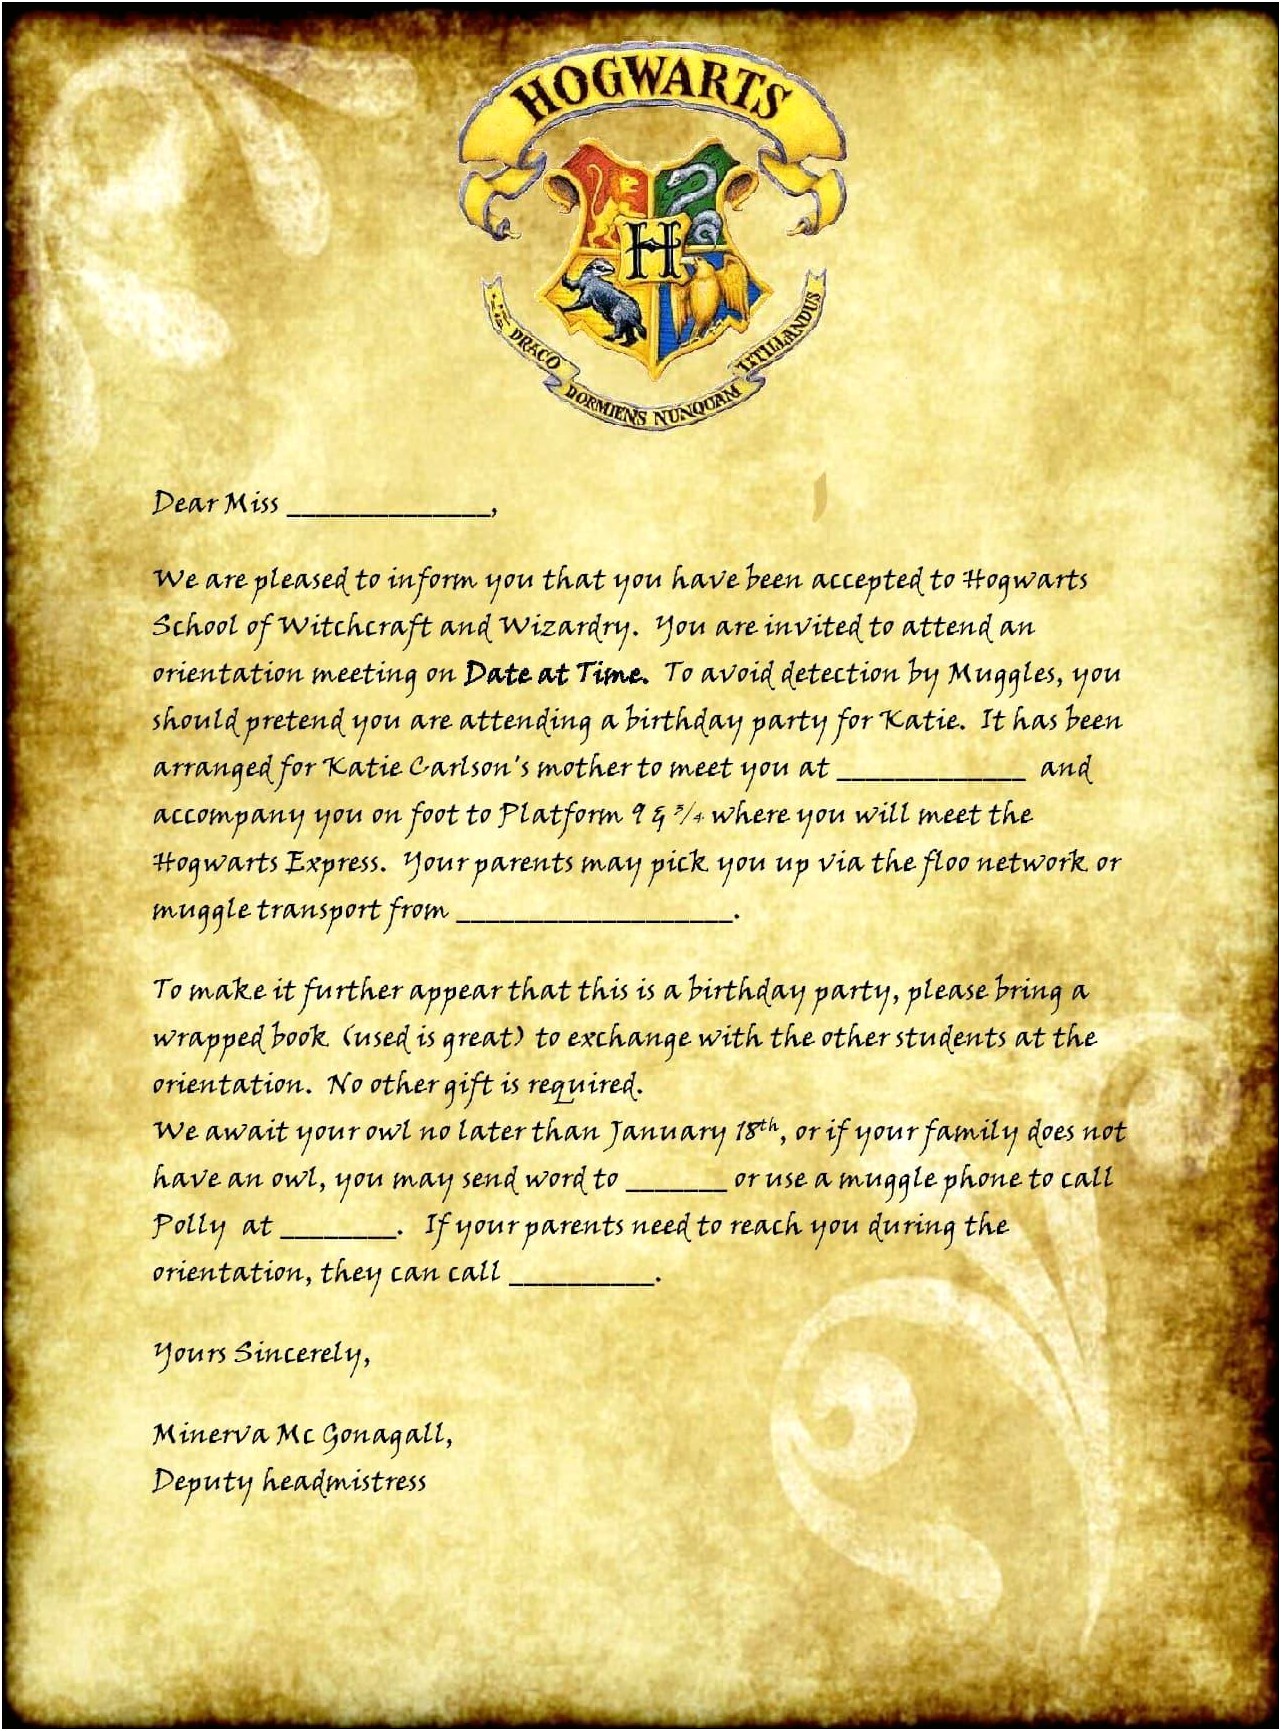 Hogwarts Acceptance Letter Template Free Download Templates Resume